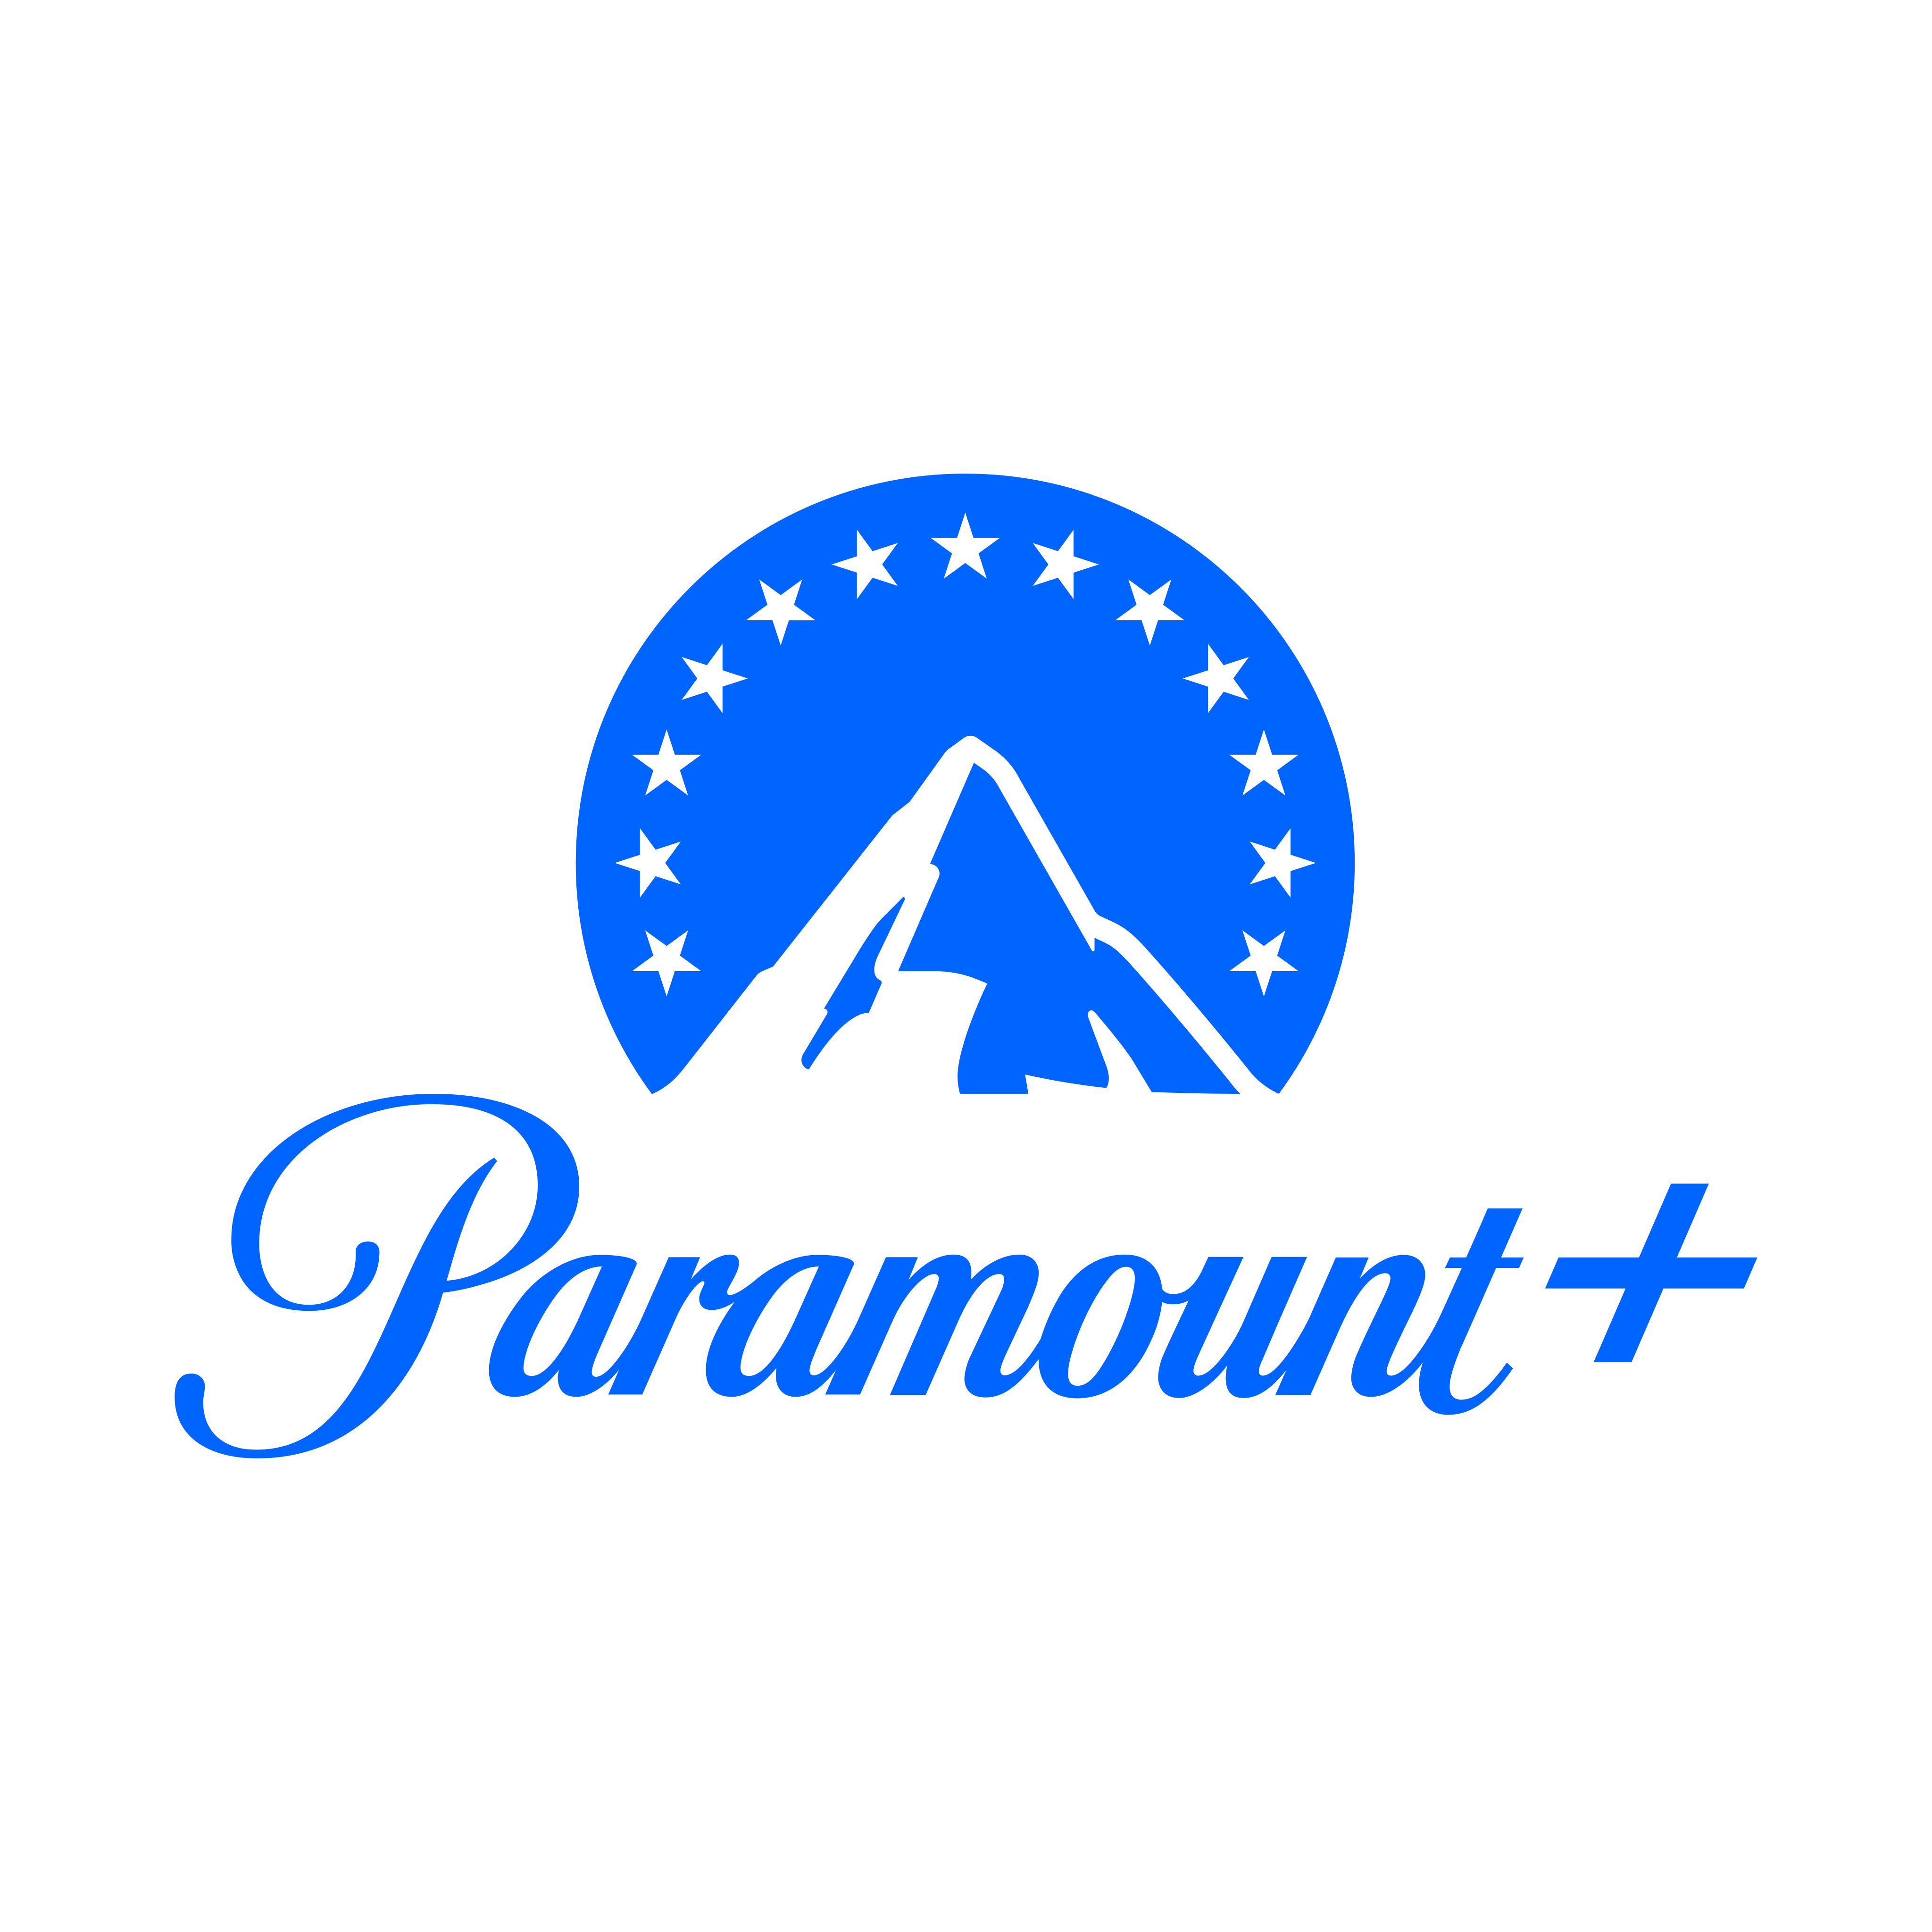 Paramount Logo PNG Transparent Images PNG All